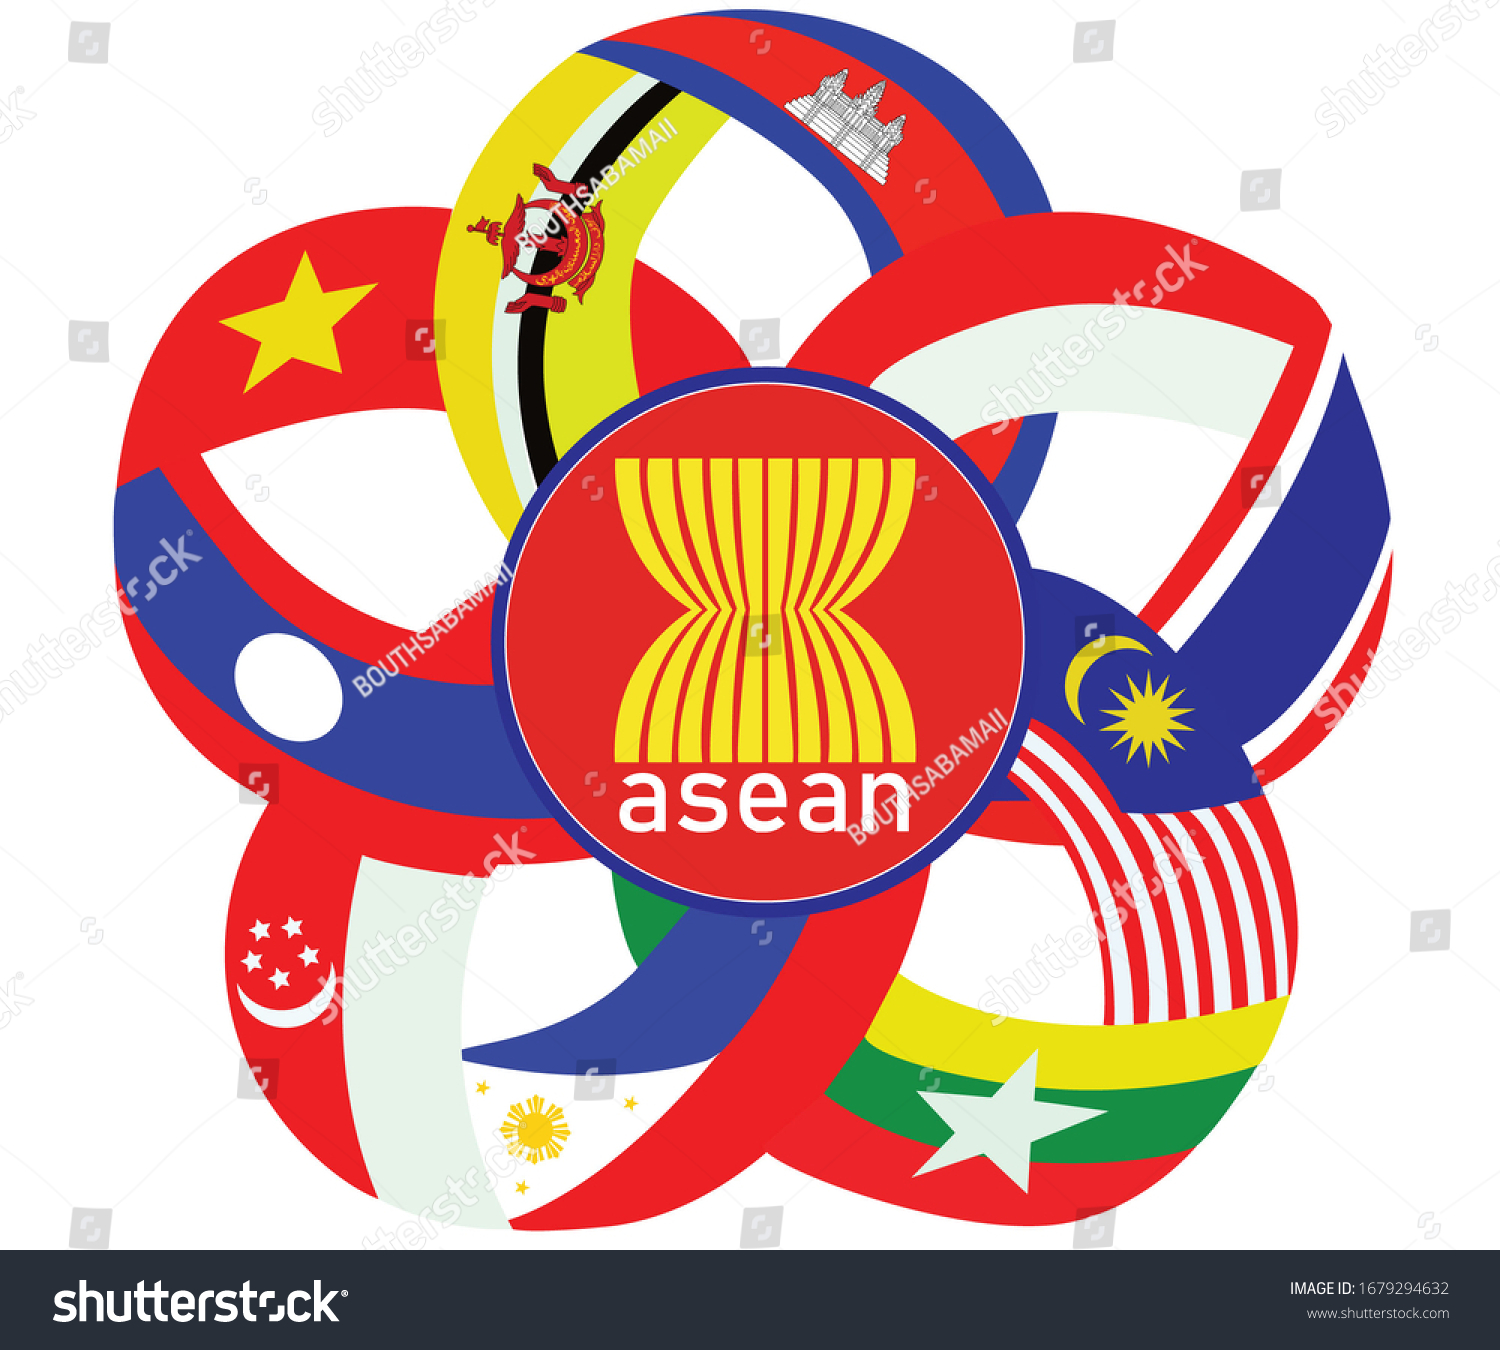 aseanの国旗とロゴ東南アジア諸国連合会の会員権のイラスト素材 1679294632 shutterstock